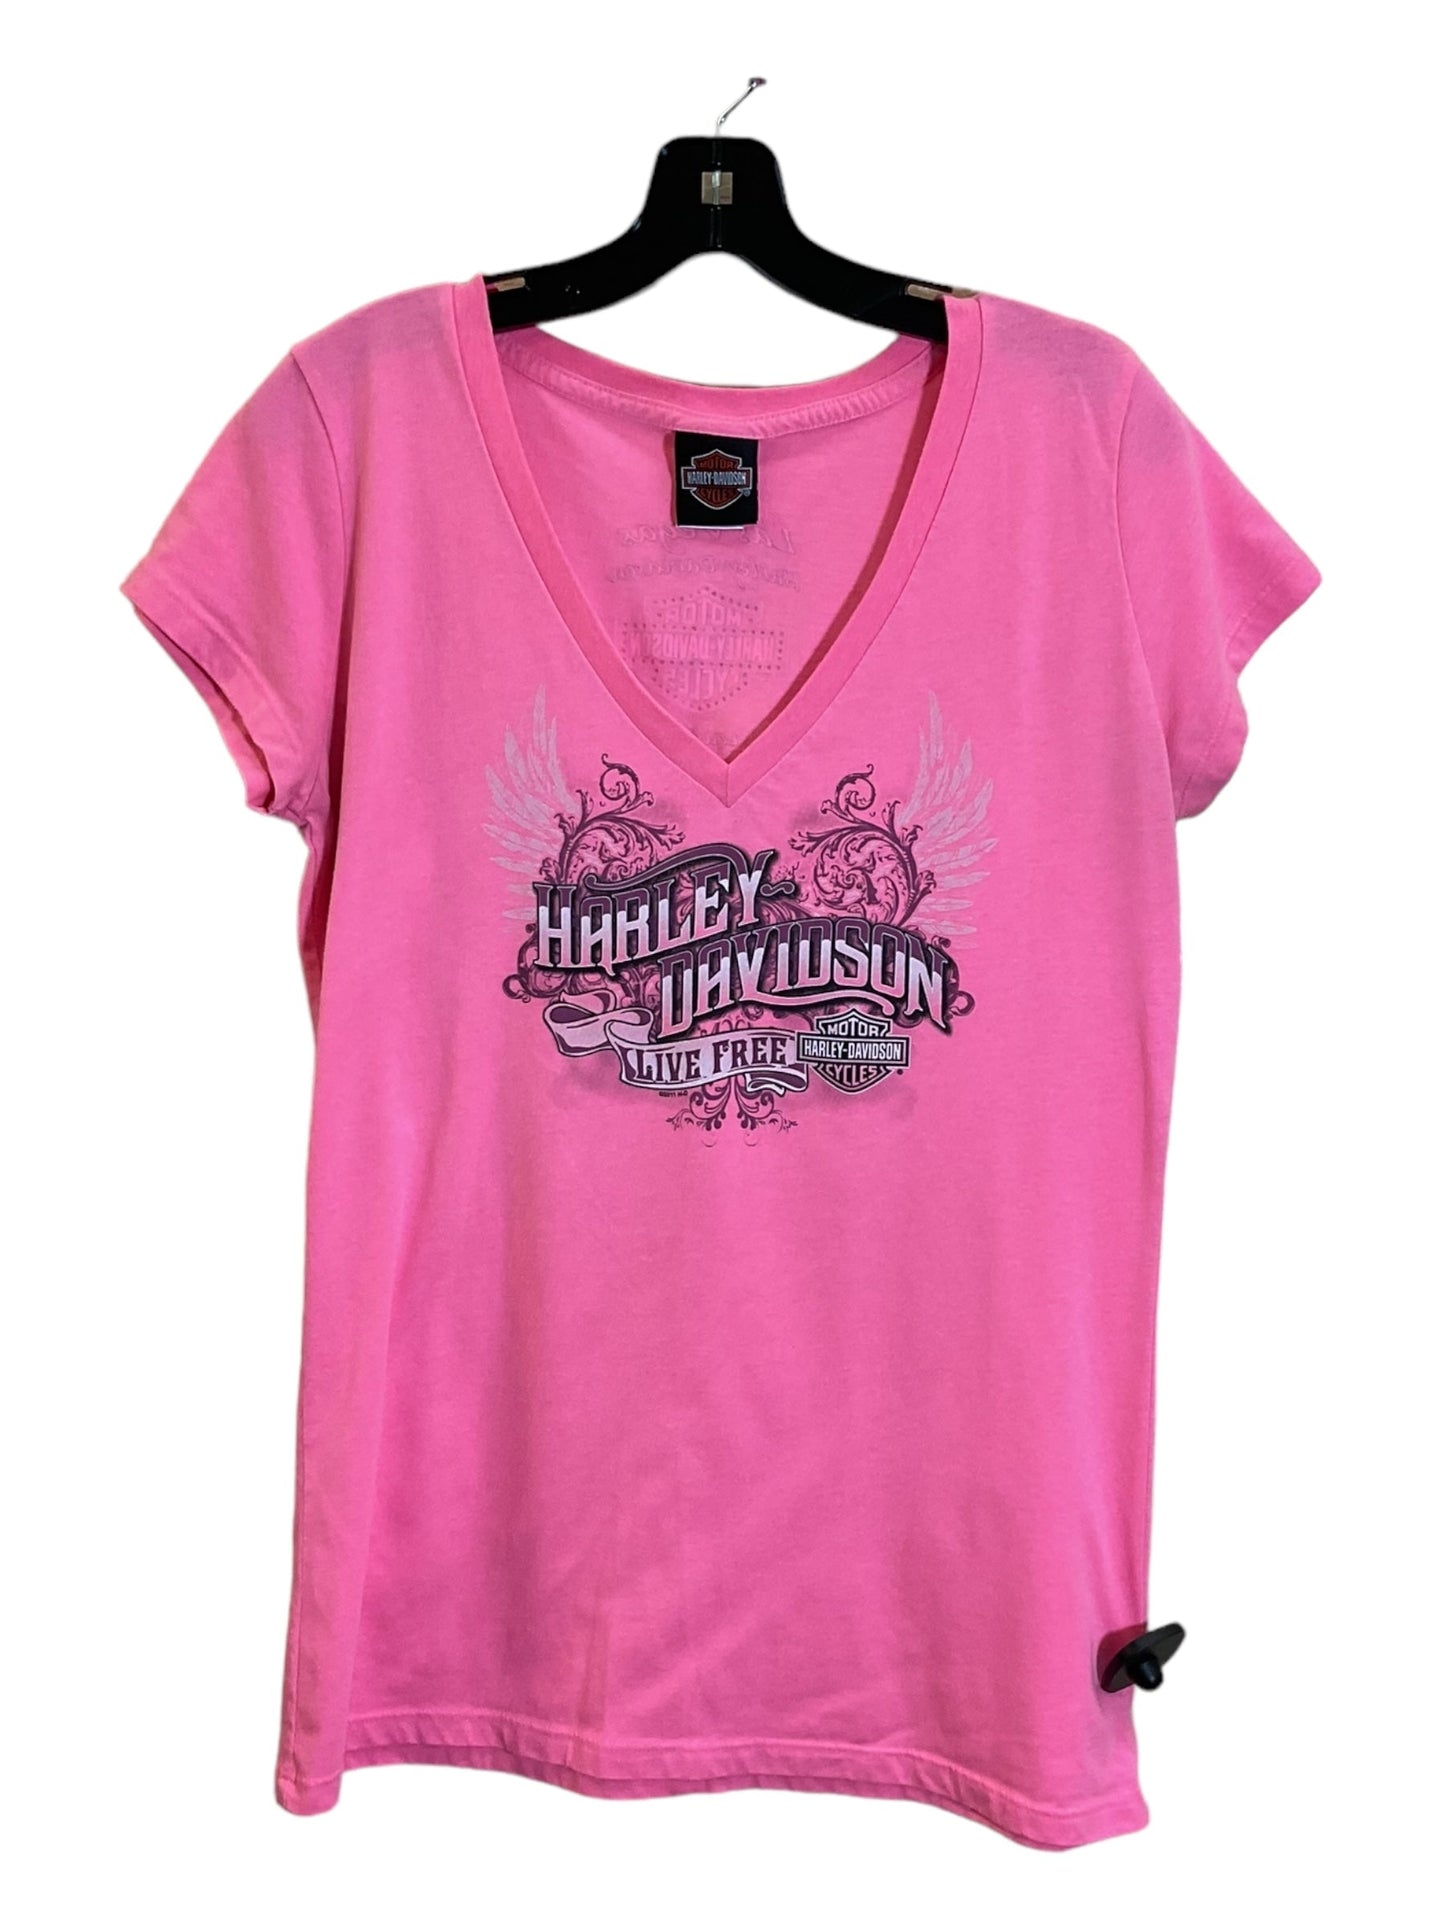 Pink Top Short Sleeve Harley Davidson, Size Xl